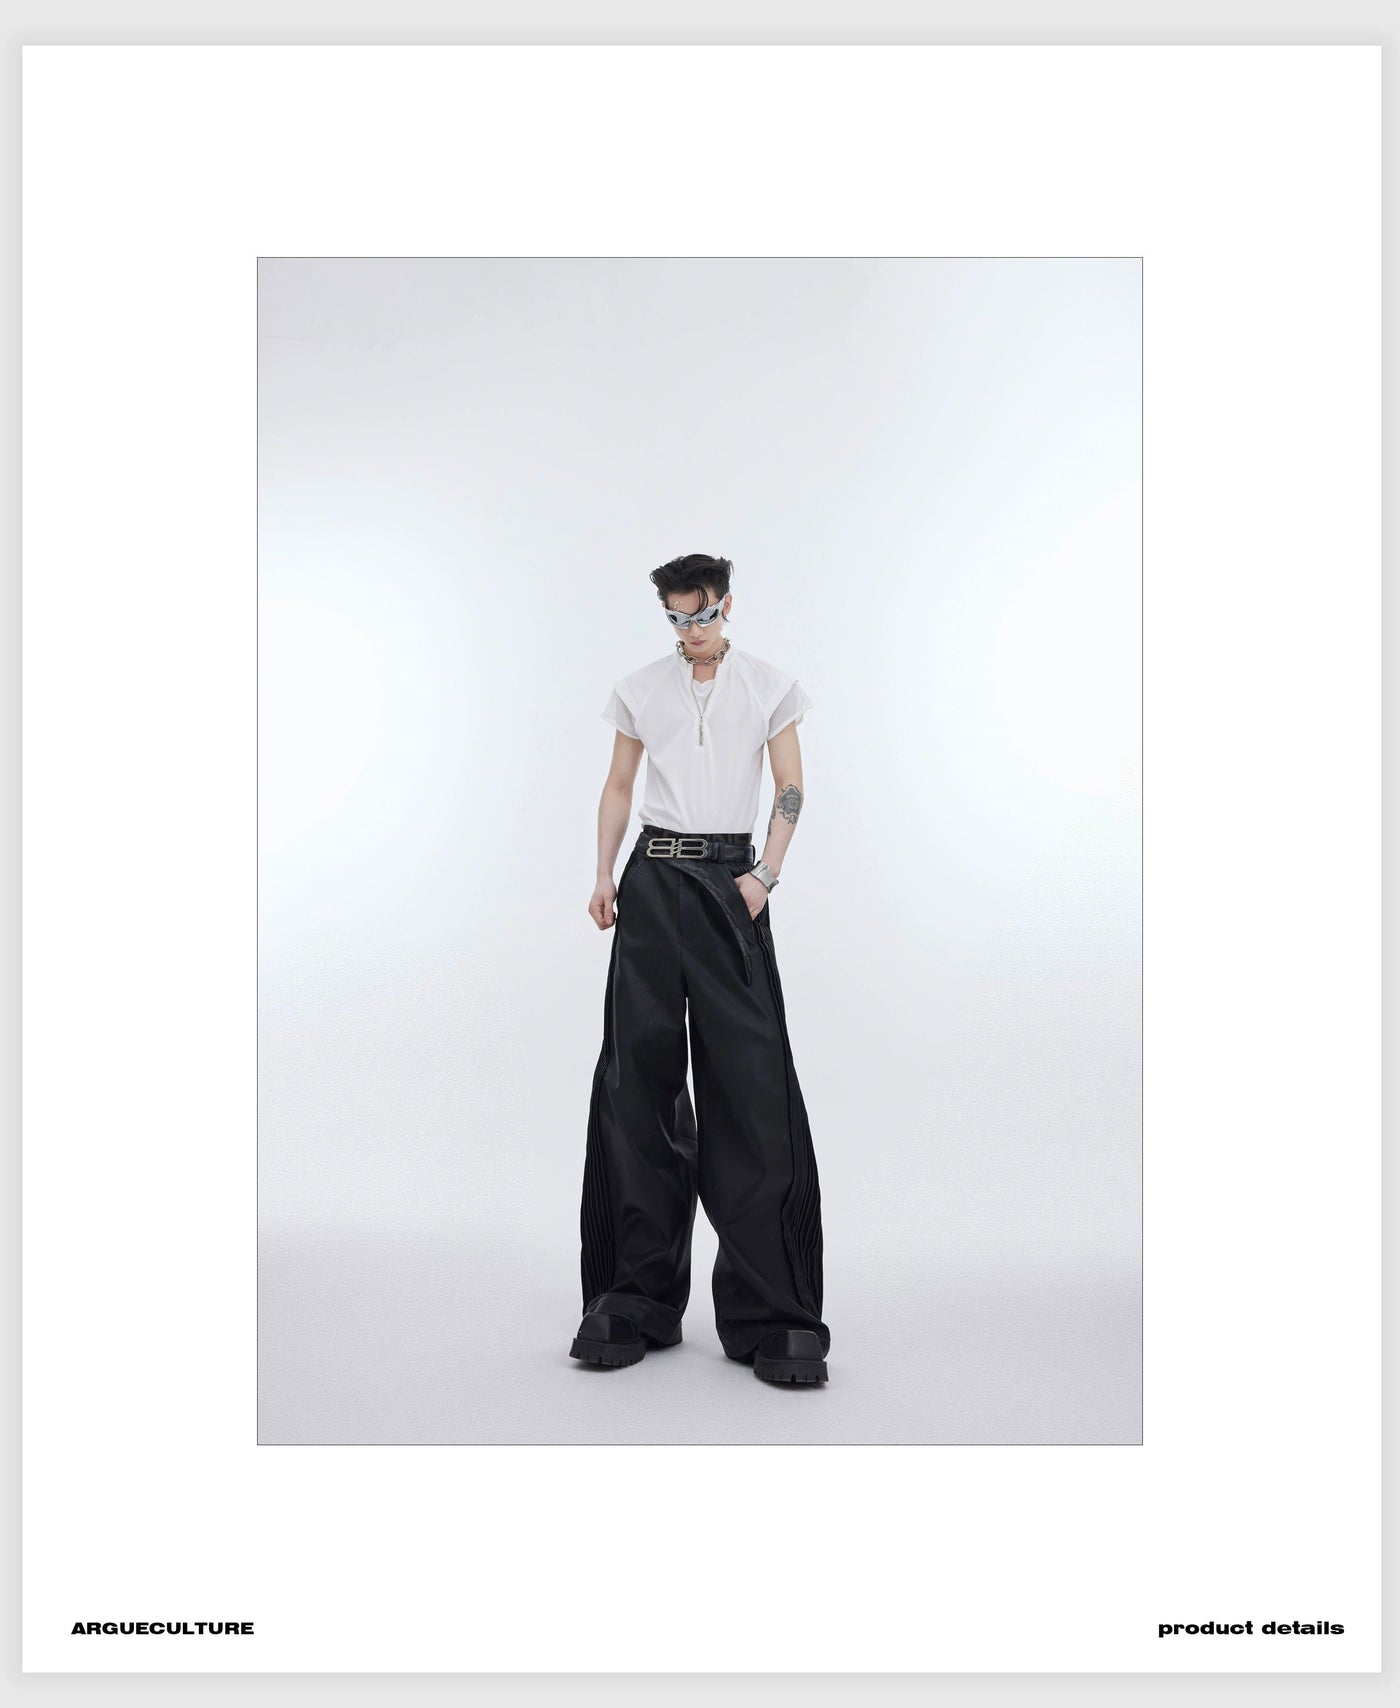 Mesh Sleeve Half-Zipped Shirt Korean Street Fashion Shirt By Argue Culture Shop Online at OH Vault